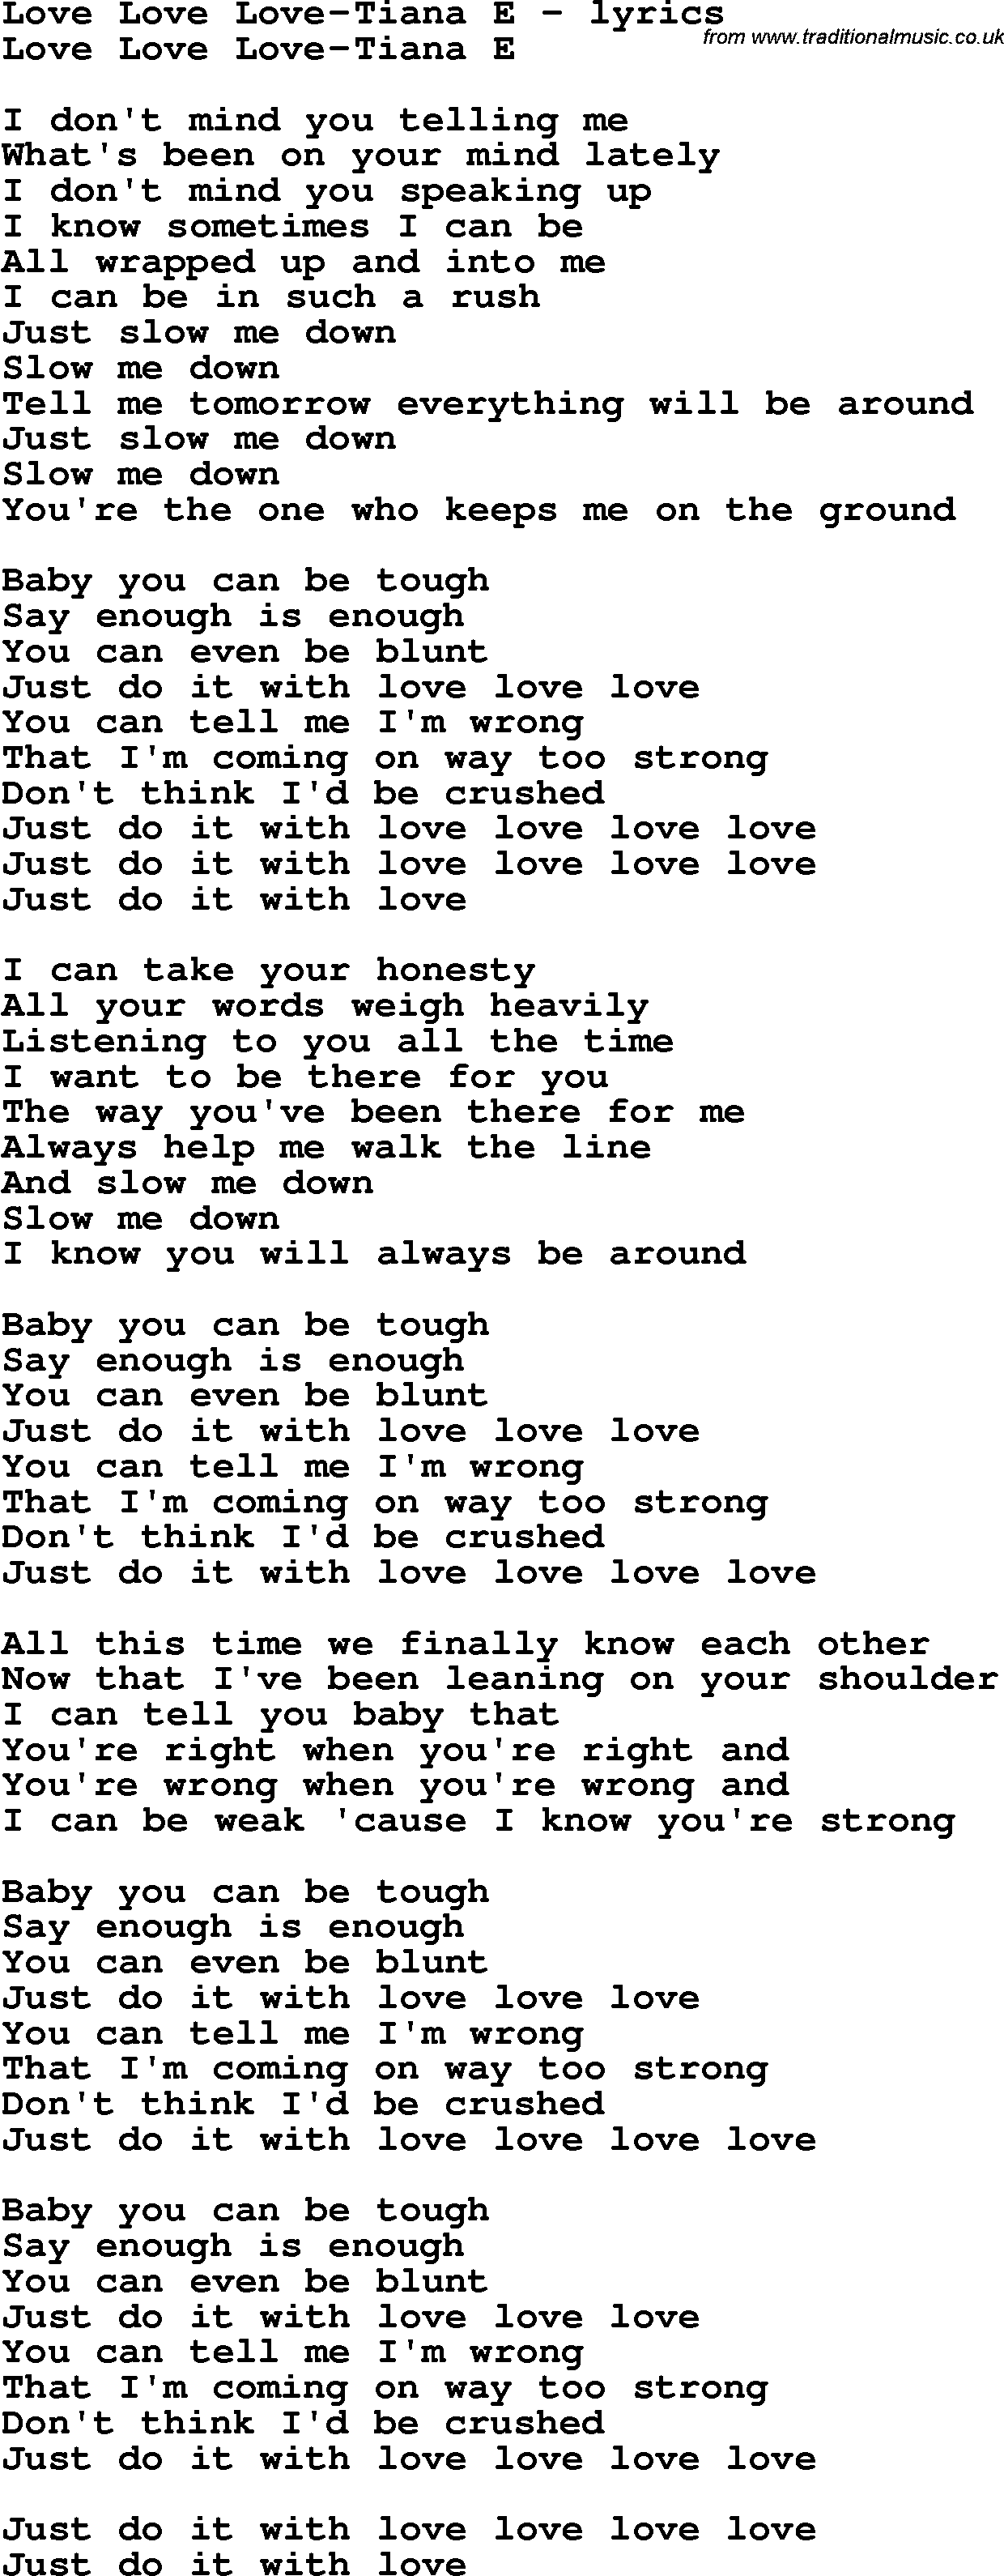 Love Song Lyrics for: Love Love Love-Tiana E